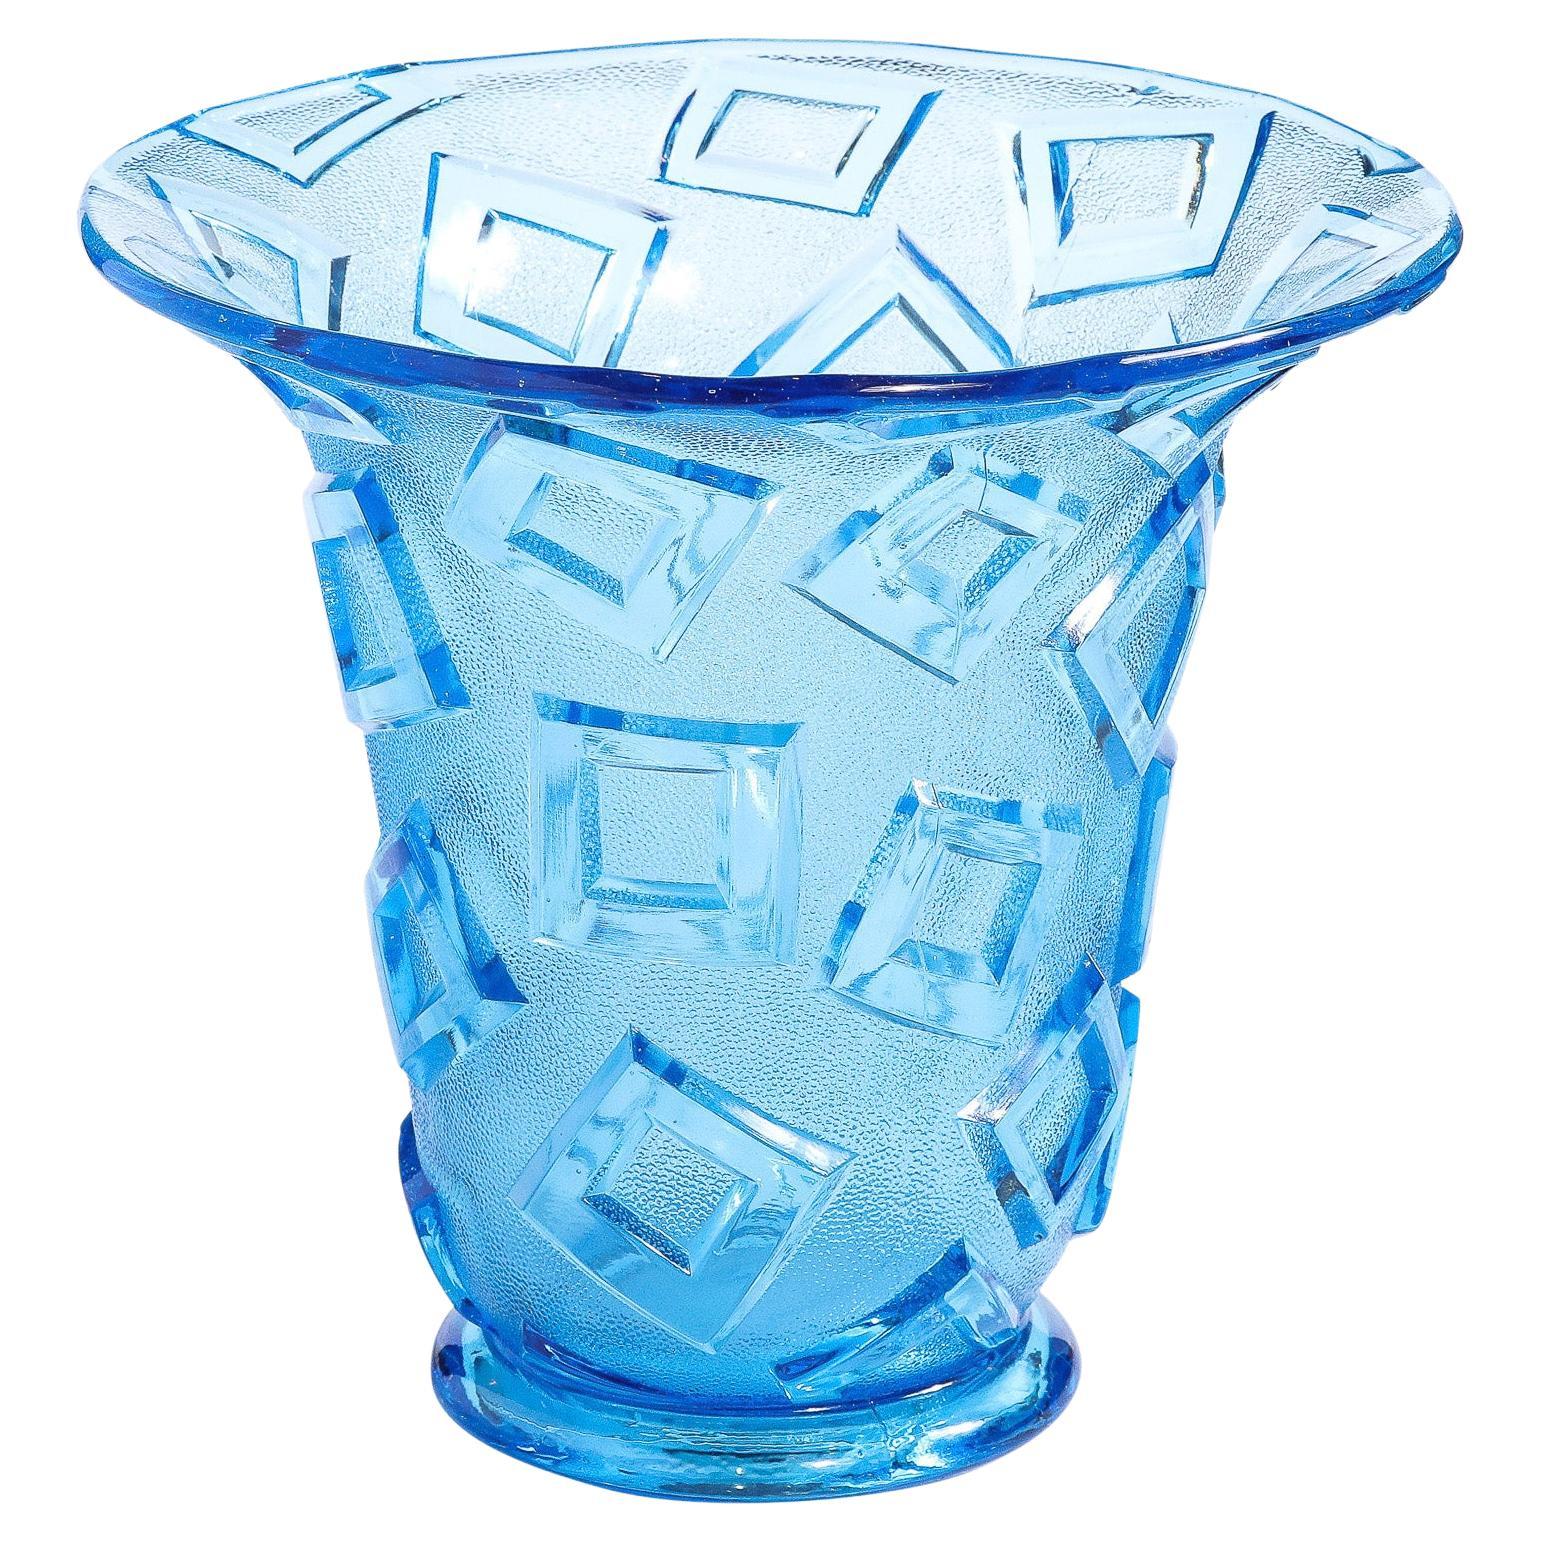 Art Deco Blue Glass Vase w/ Raised Translucent Geometric Patterning